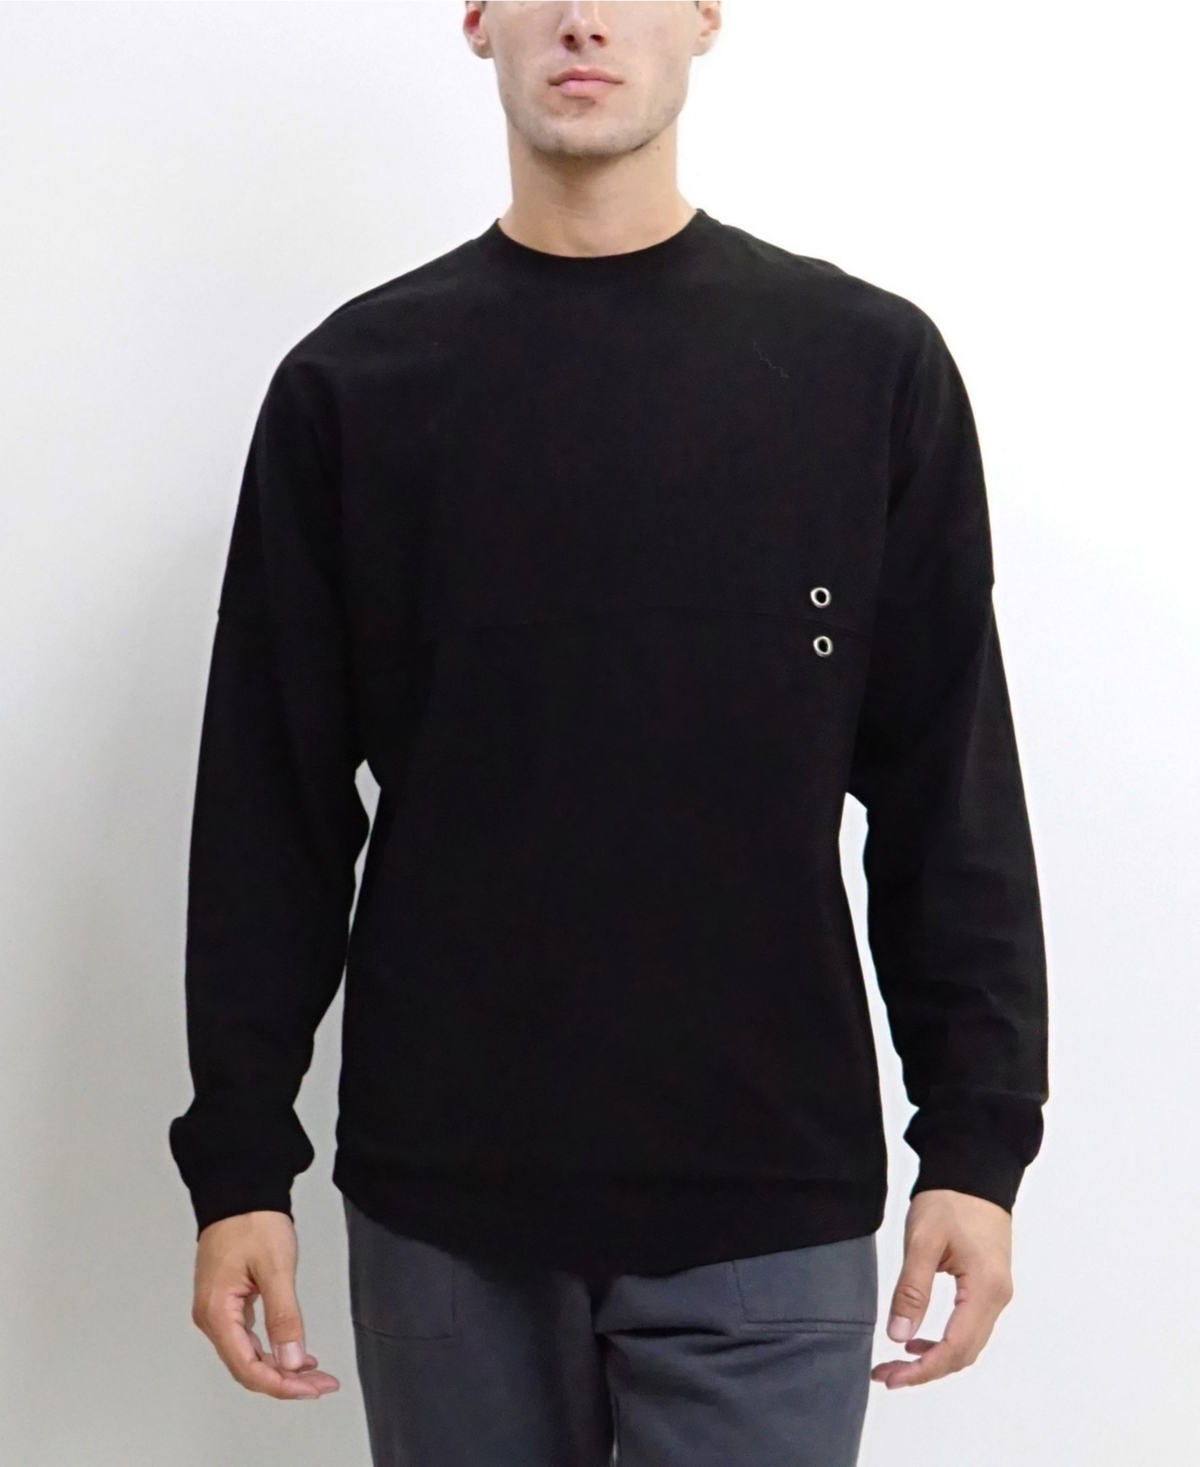 Men's Long-Sleeve Pullover Sweatshirt - Black